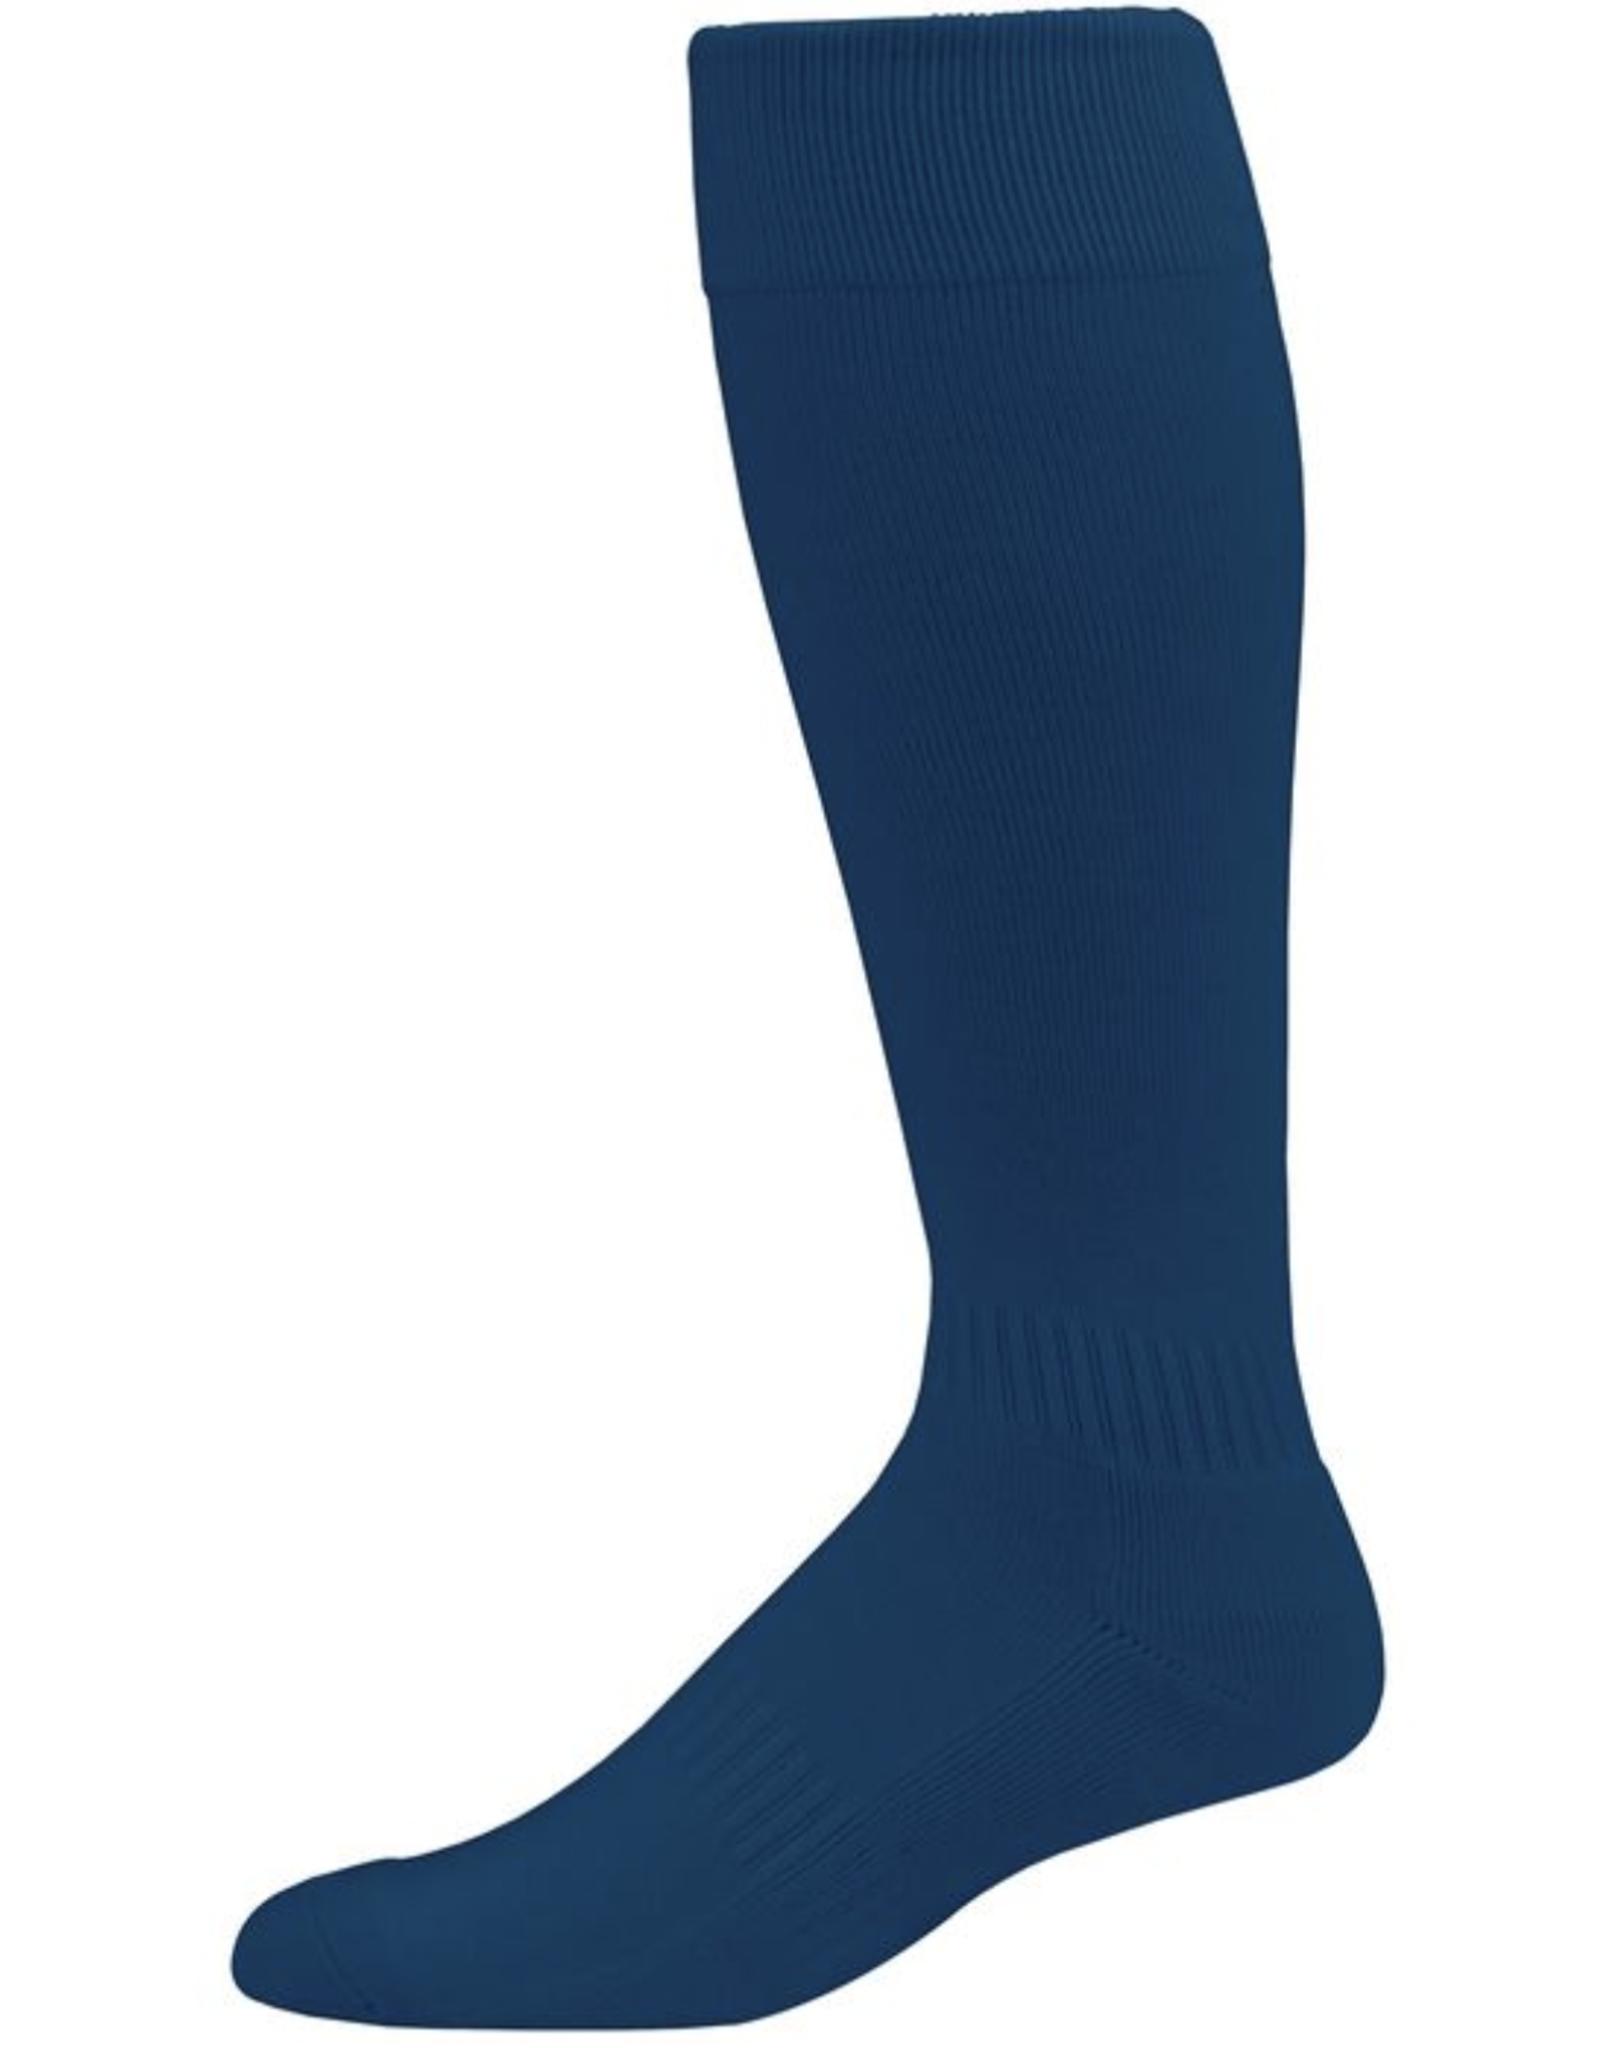 NON-UNIFORM Sock - Multi-Sport Sock